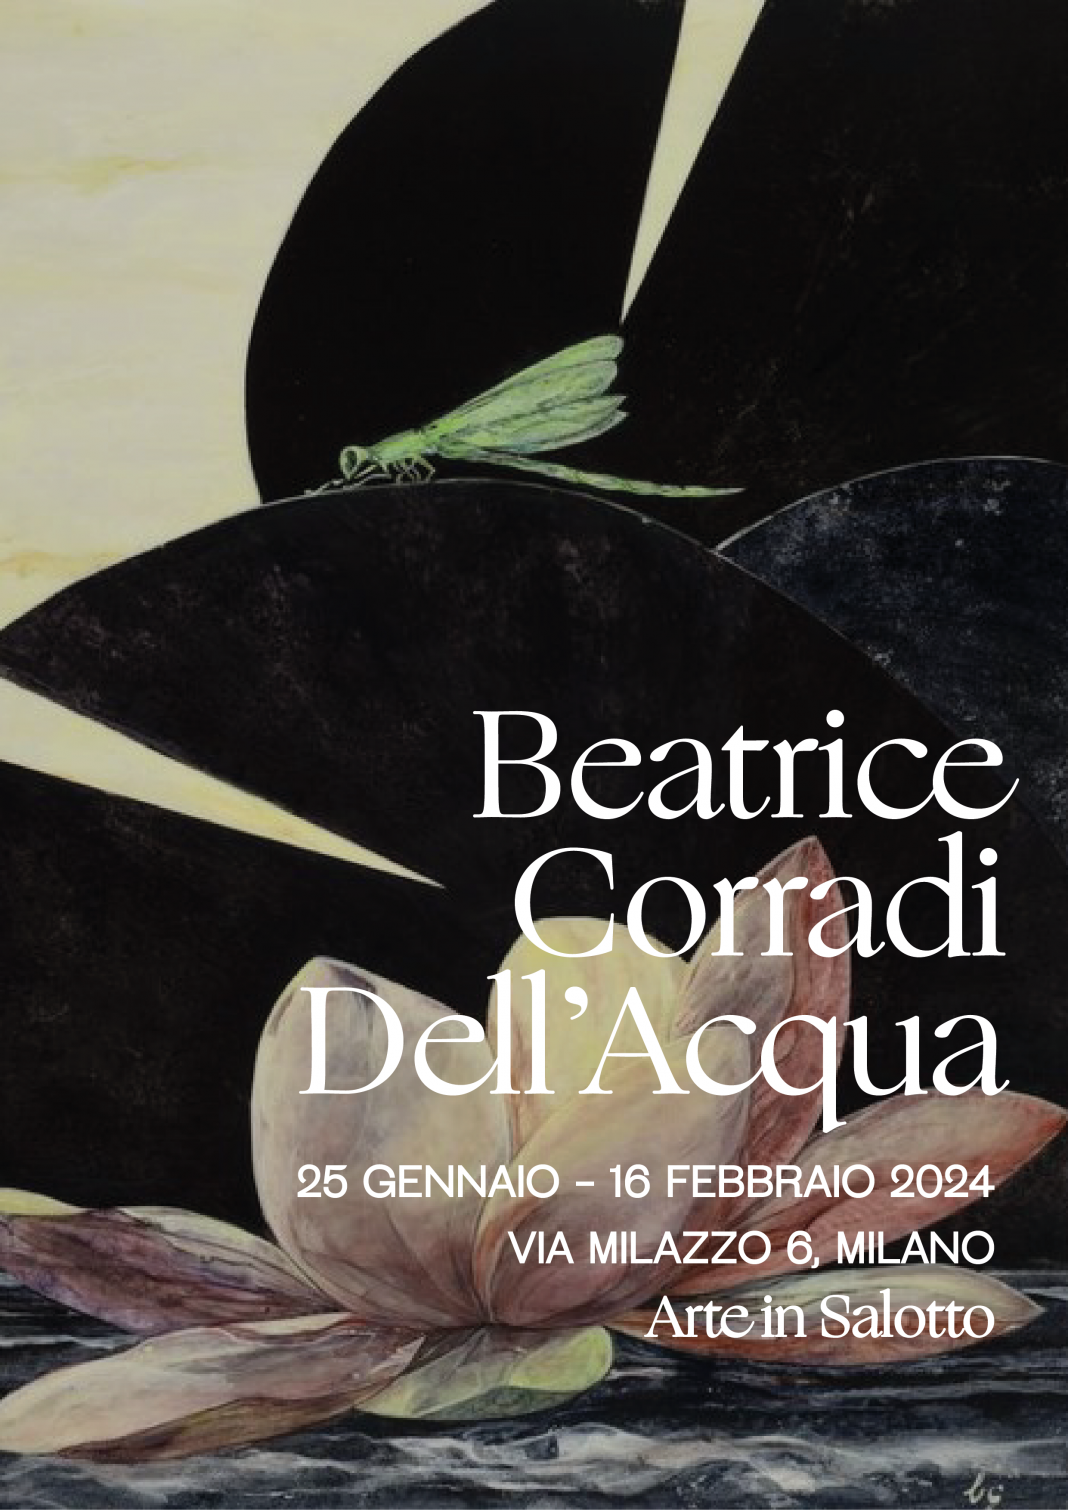 Beatrice Corradi – Dell’Acquahttps://www.exibart.com/repository/media/formidable/11/img/ac4/Locandina-Beatrice-Corradi-DellAcqua-Arte-in-Salotto-1068x1510.png